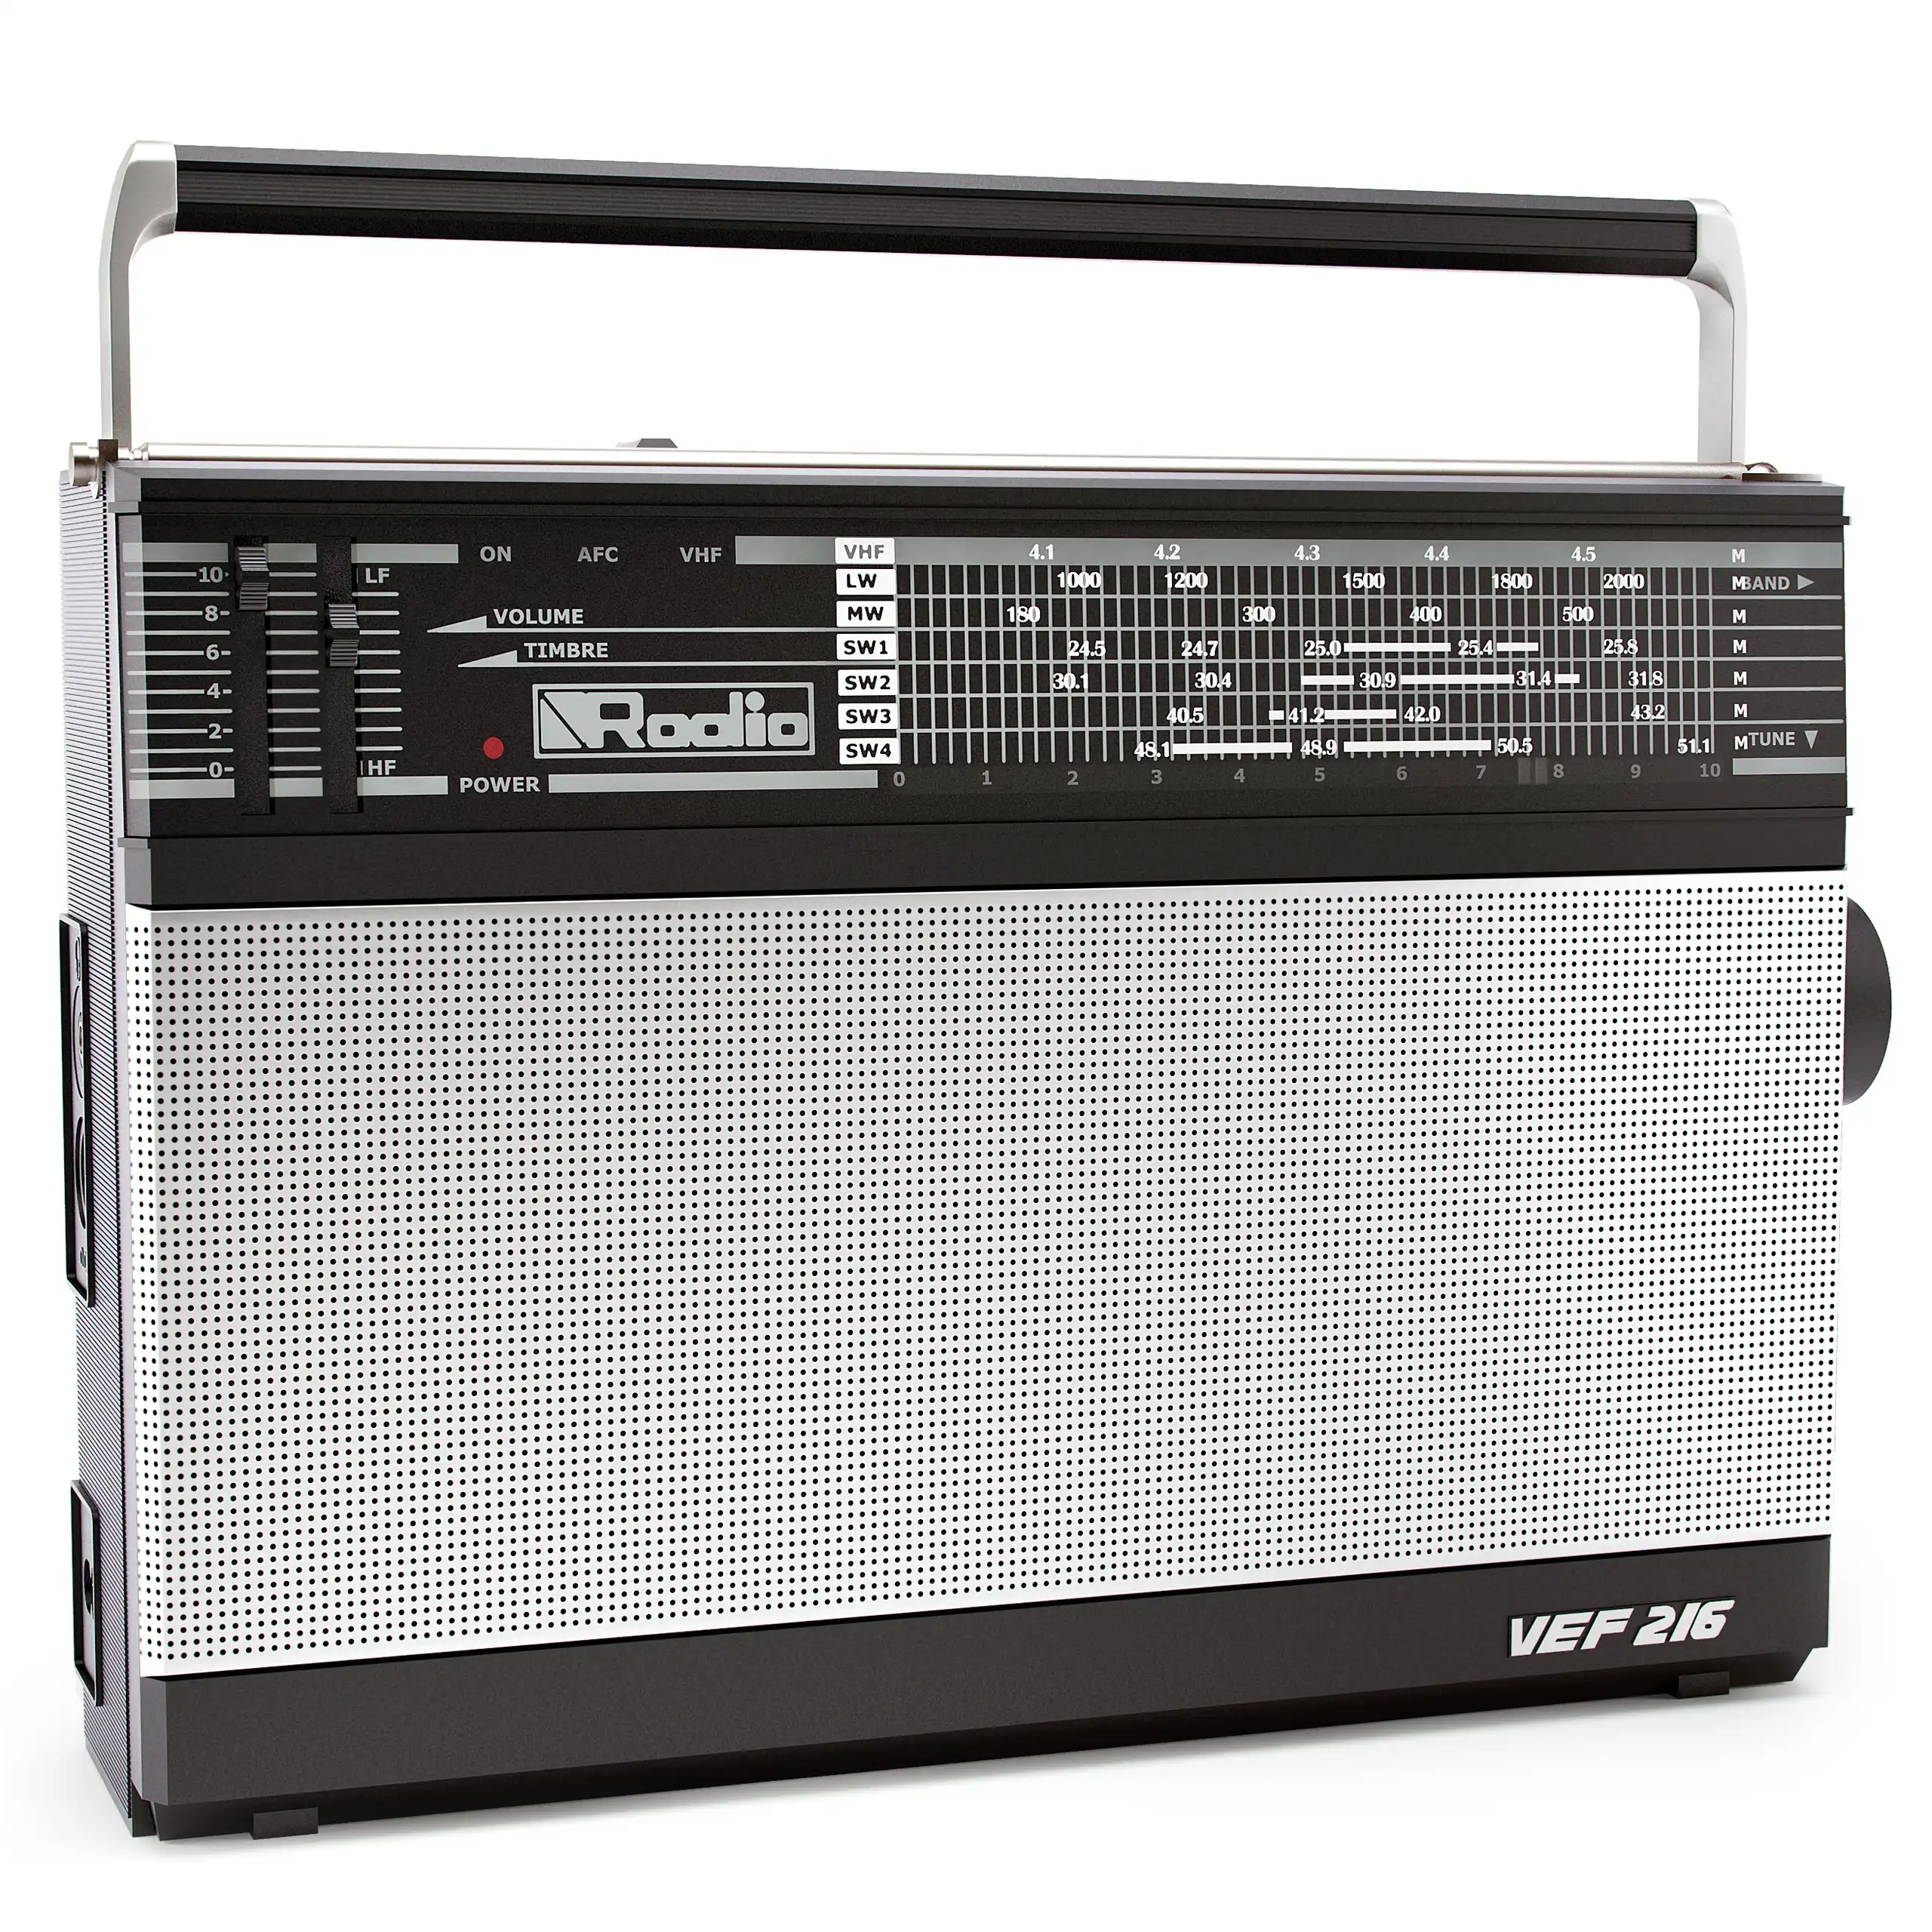 Portable Retro Radio Vef 216 3D Model